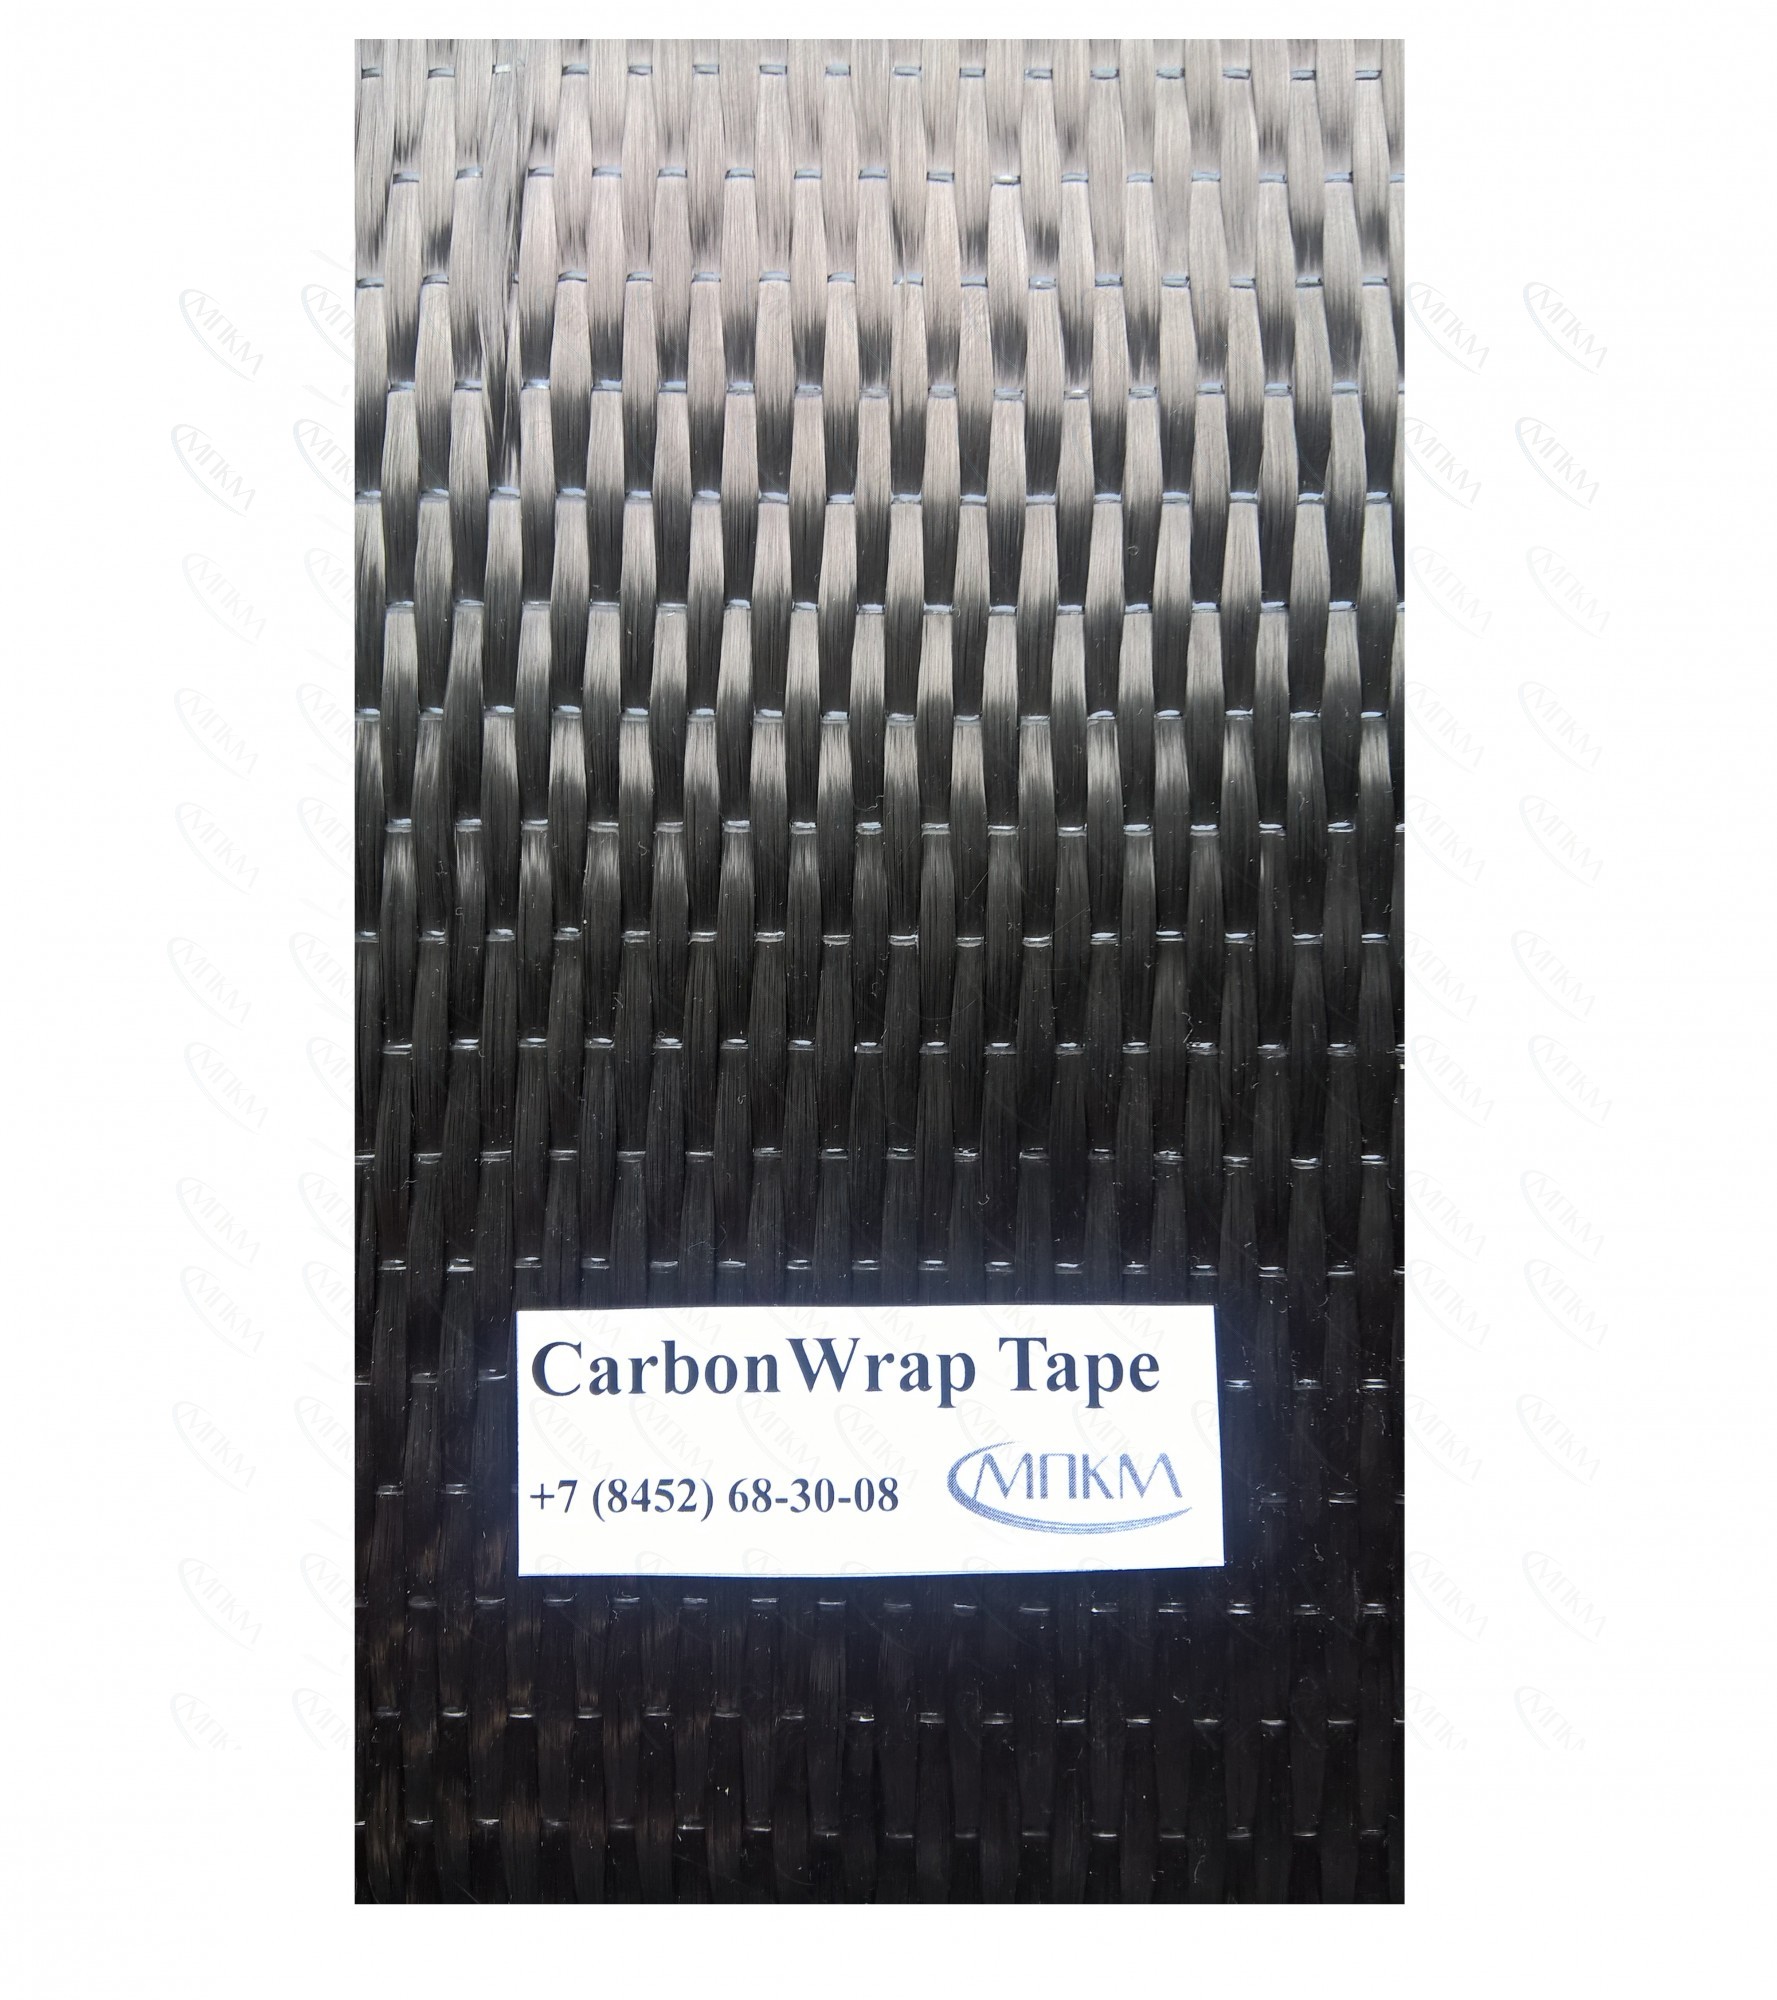 CarbonWrap Tape 530/300 в городе Москва, фото 1, телефон продавца: +7 (800) 550-03-50